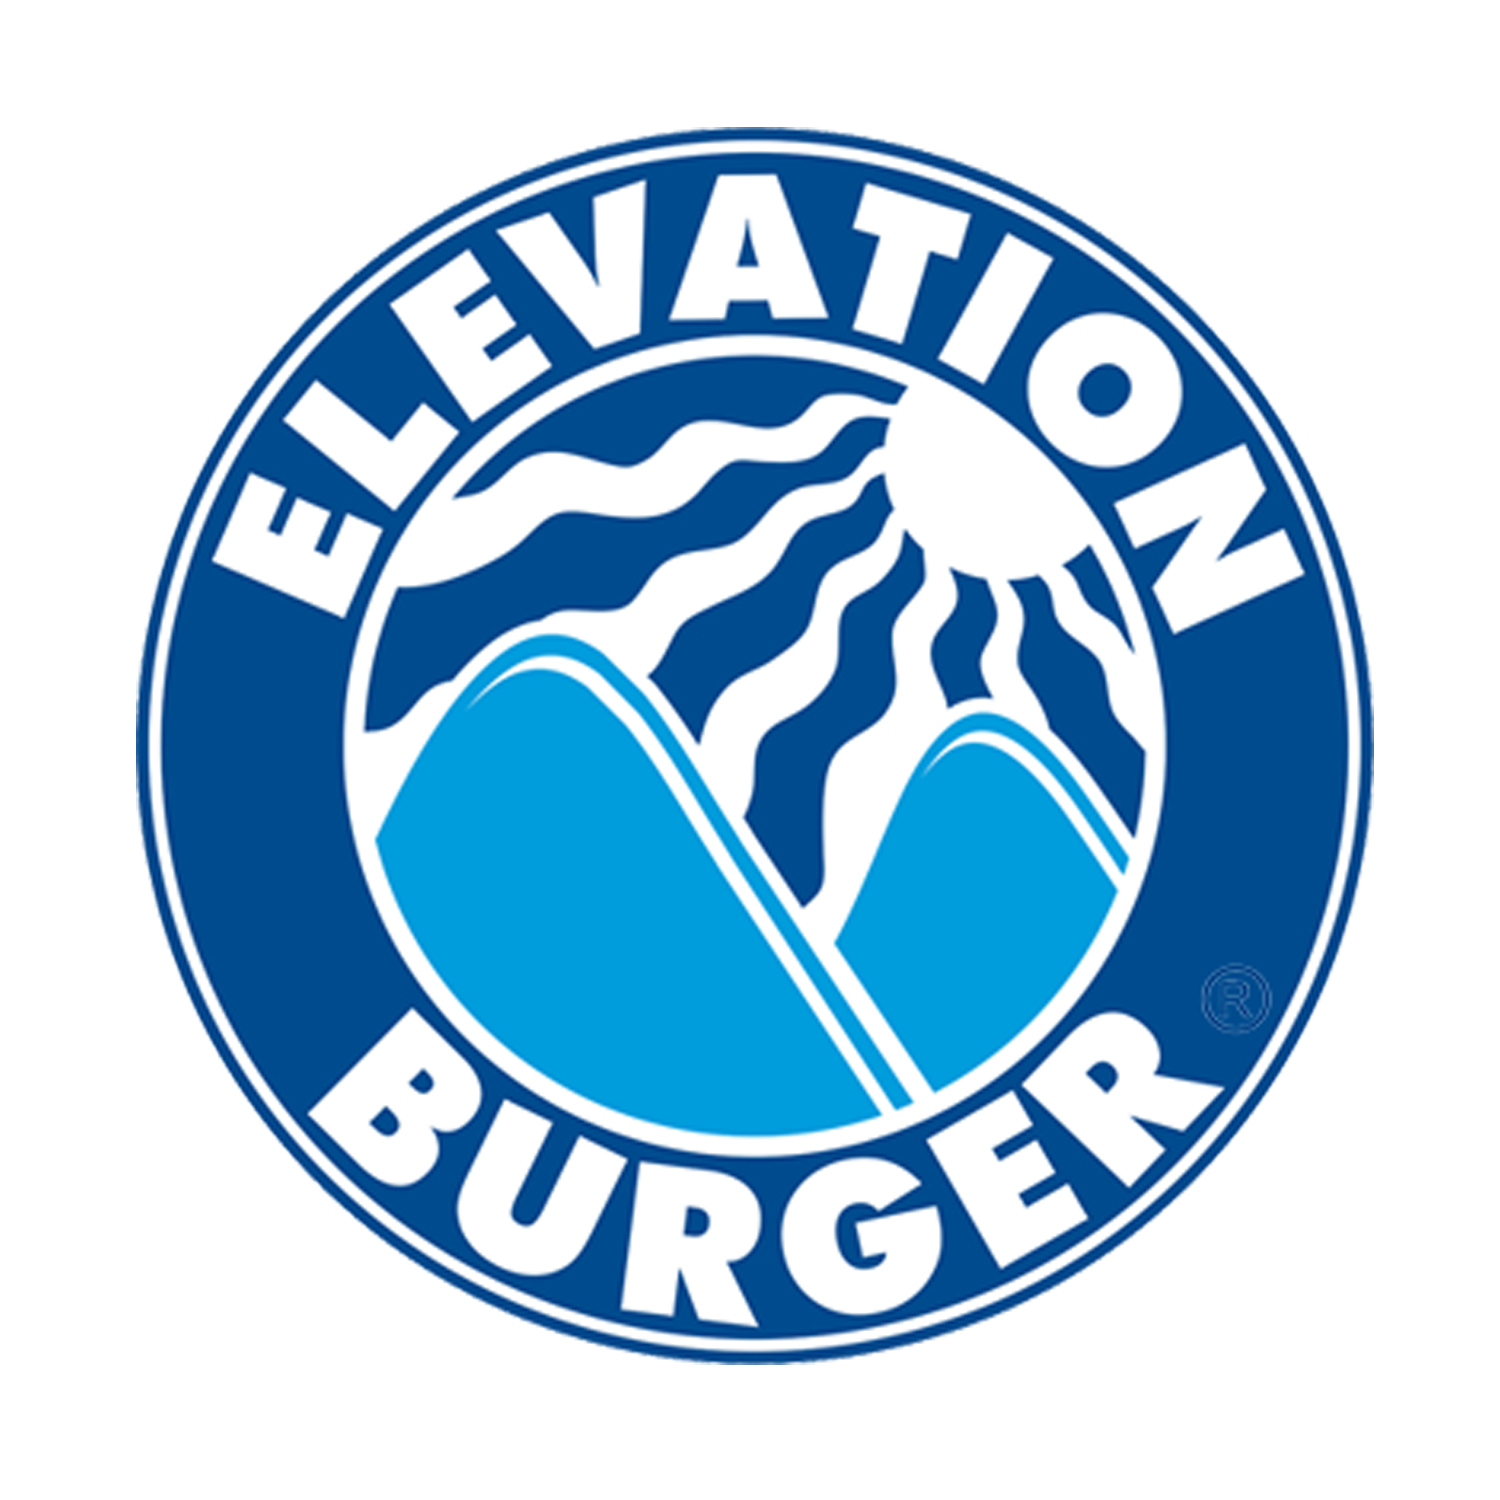 Elevation Burger Offers Halal Beef & Chicken